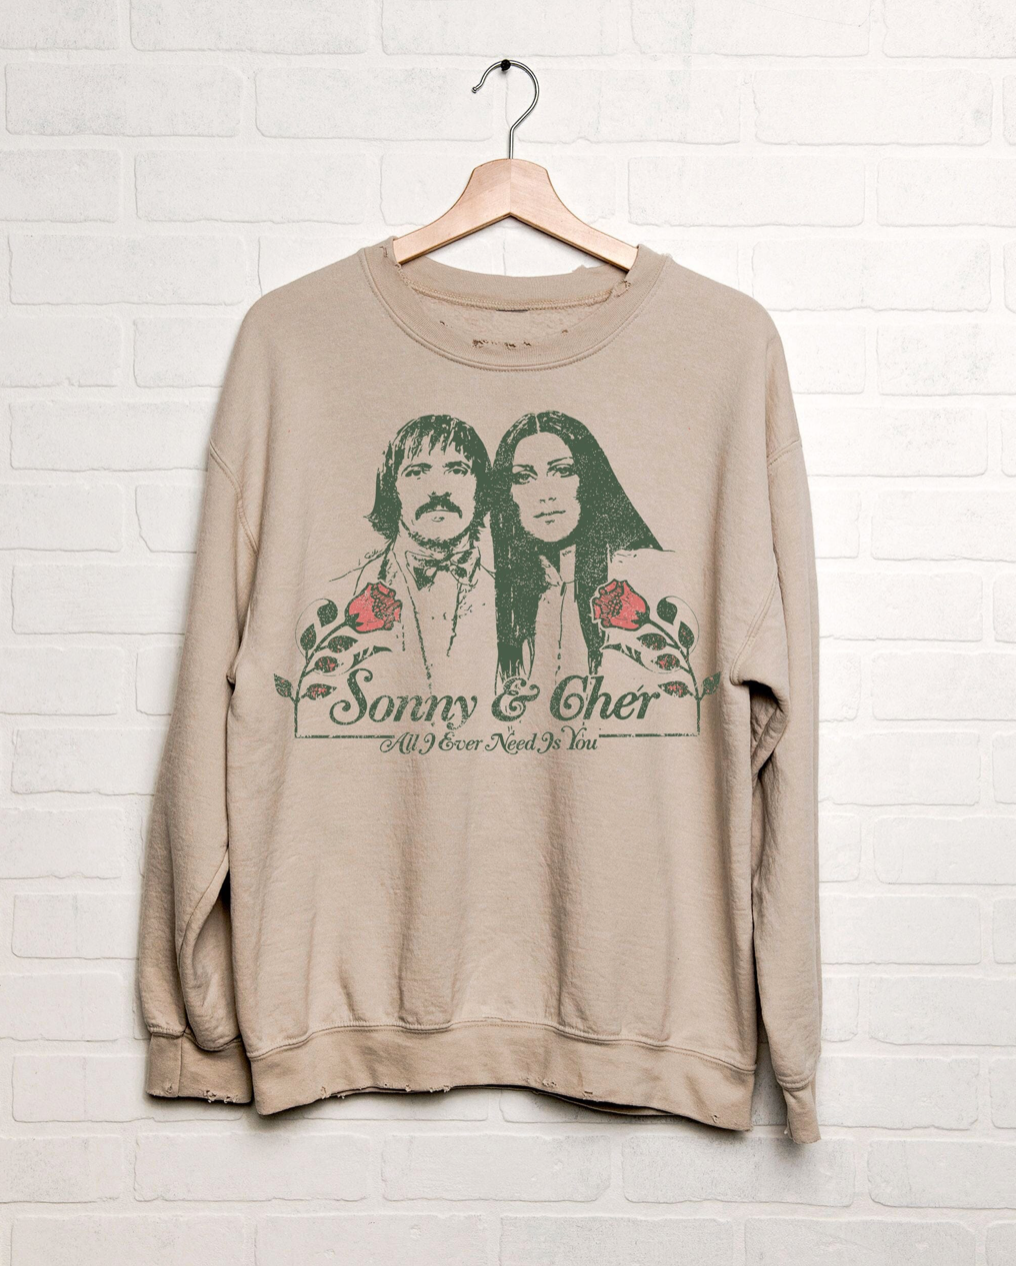 Sonny & Cher Thrifted Sweatshirt